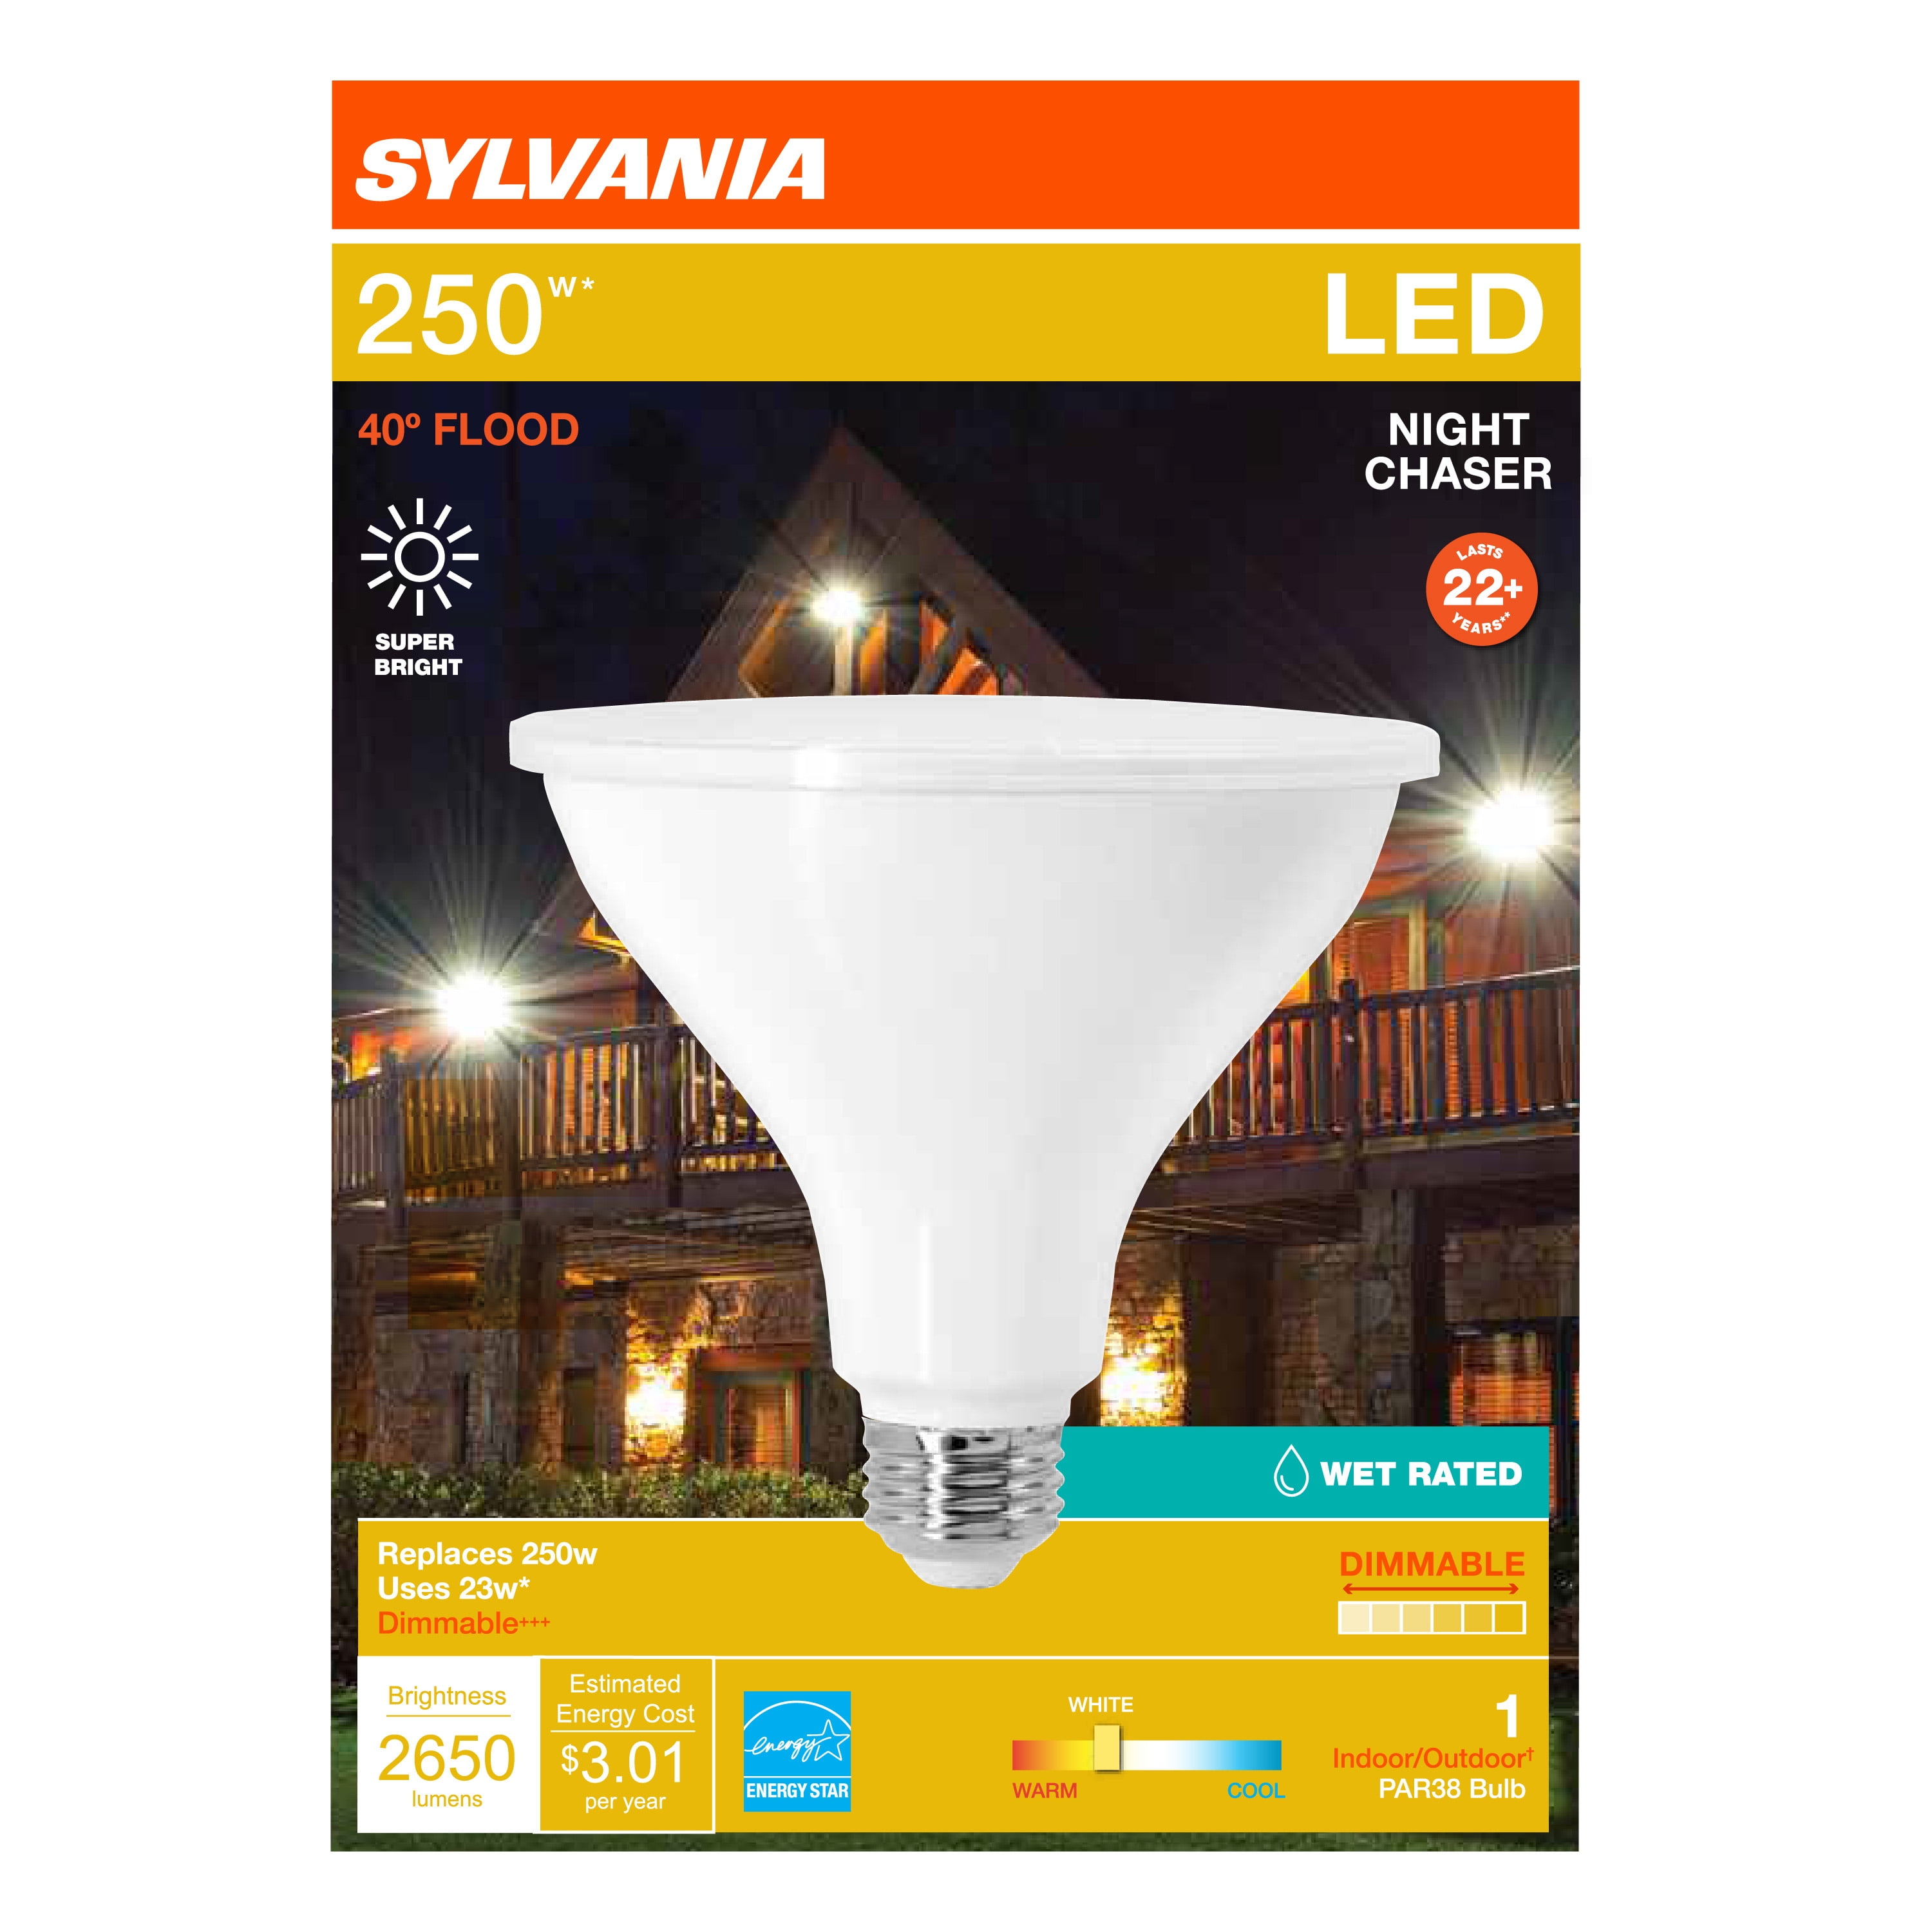 SYLVANIA Night Chaser LED Light Bulb 250W Equivalent, Dimmable, 3000K White - Walmart.com